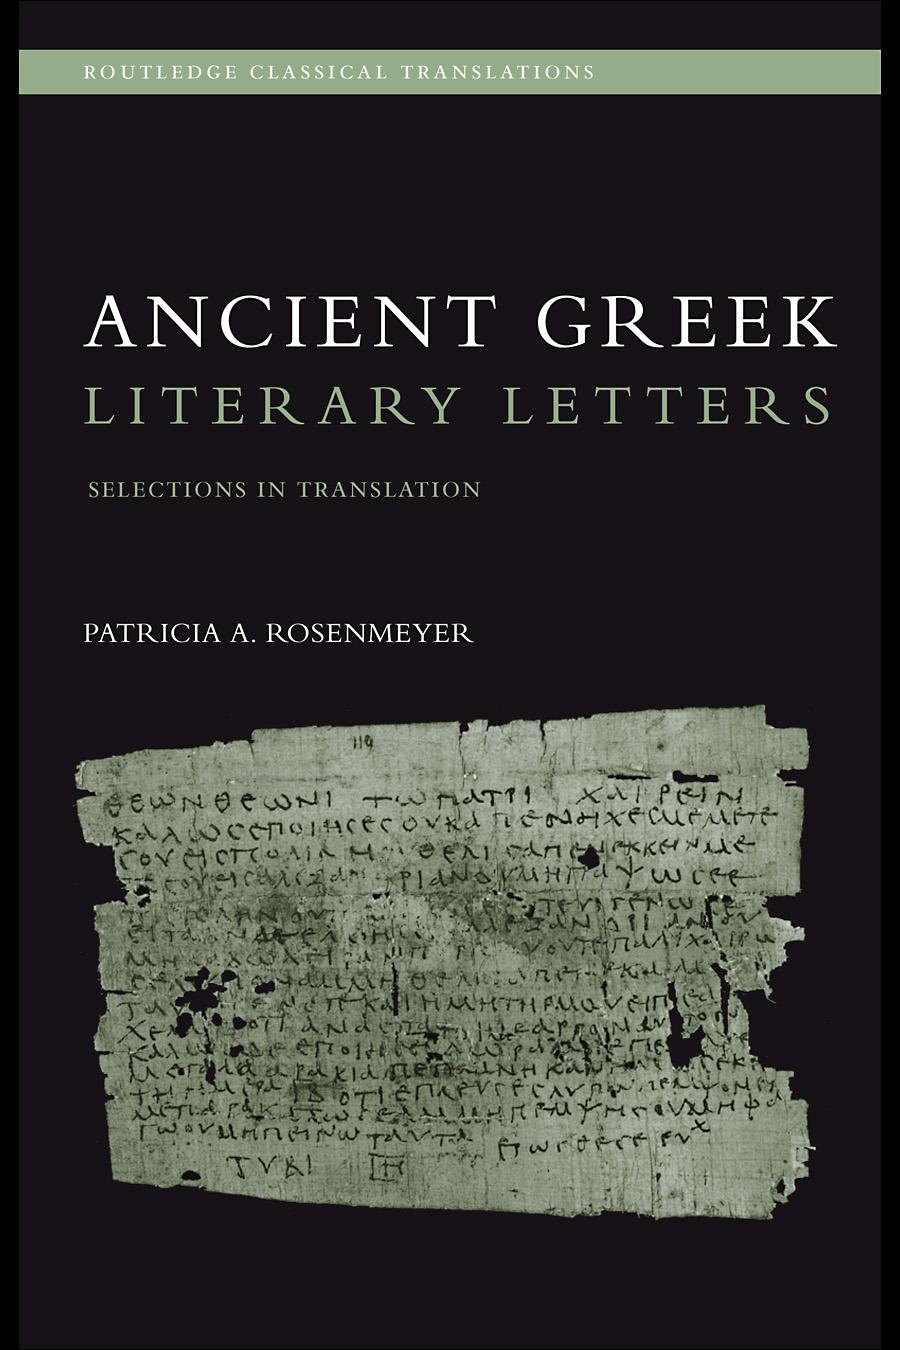 Ancient Greek Translation Program